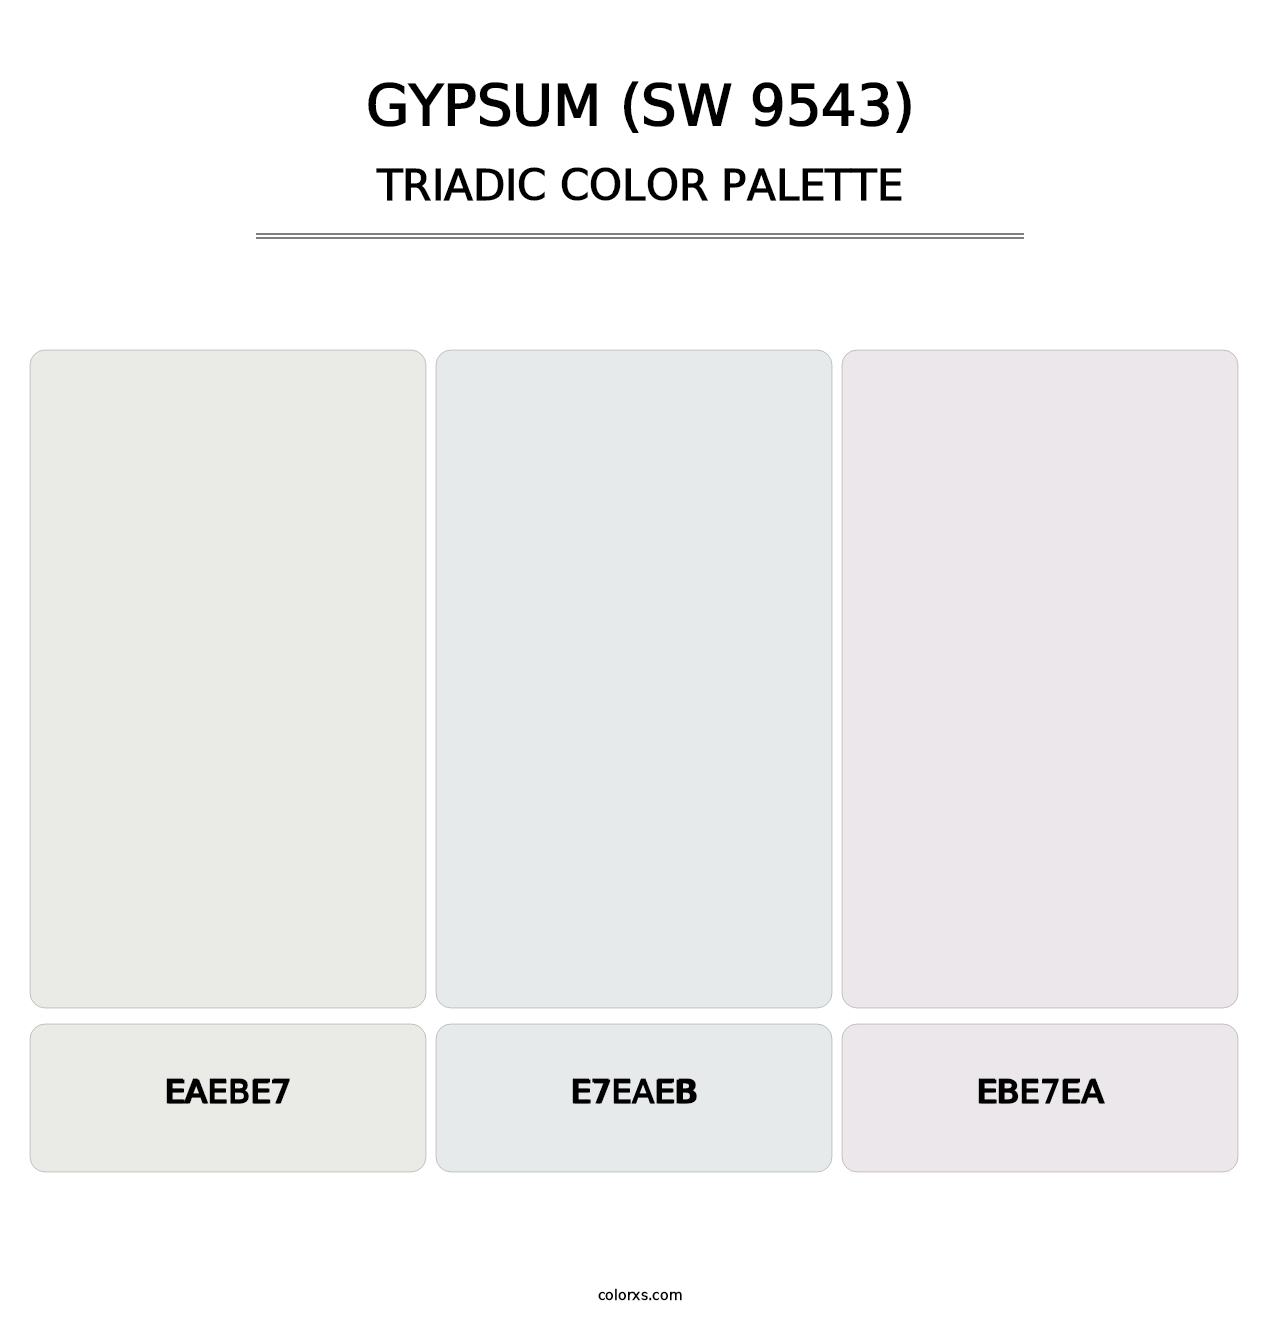 Gypsum (SW 9543) - Triadic Color Palette